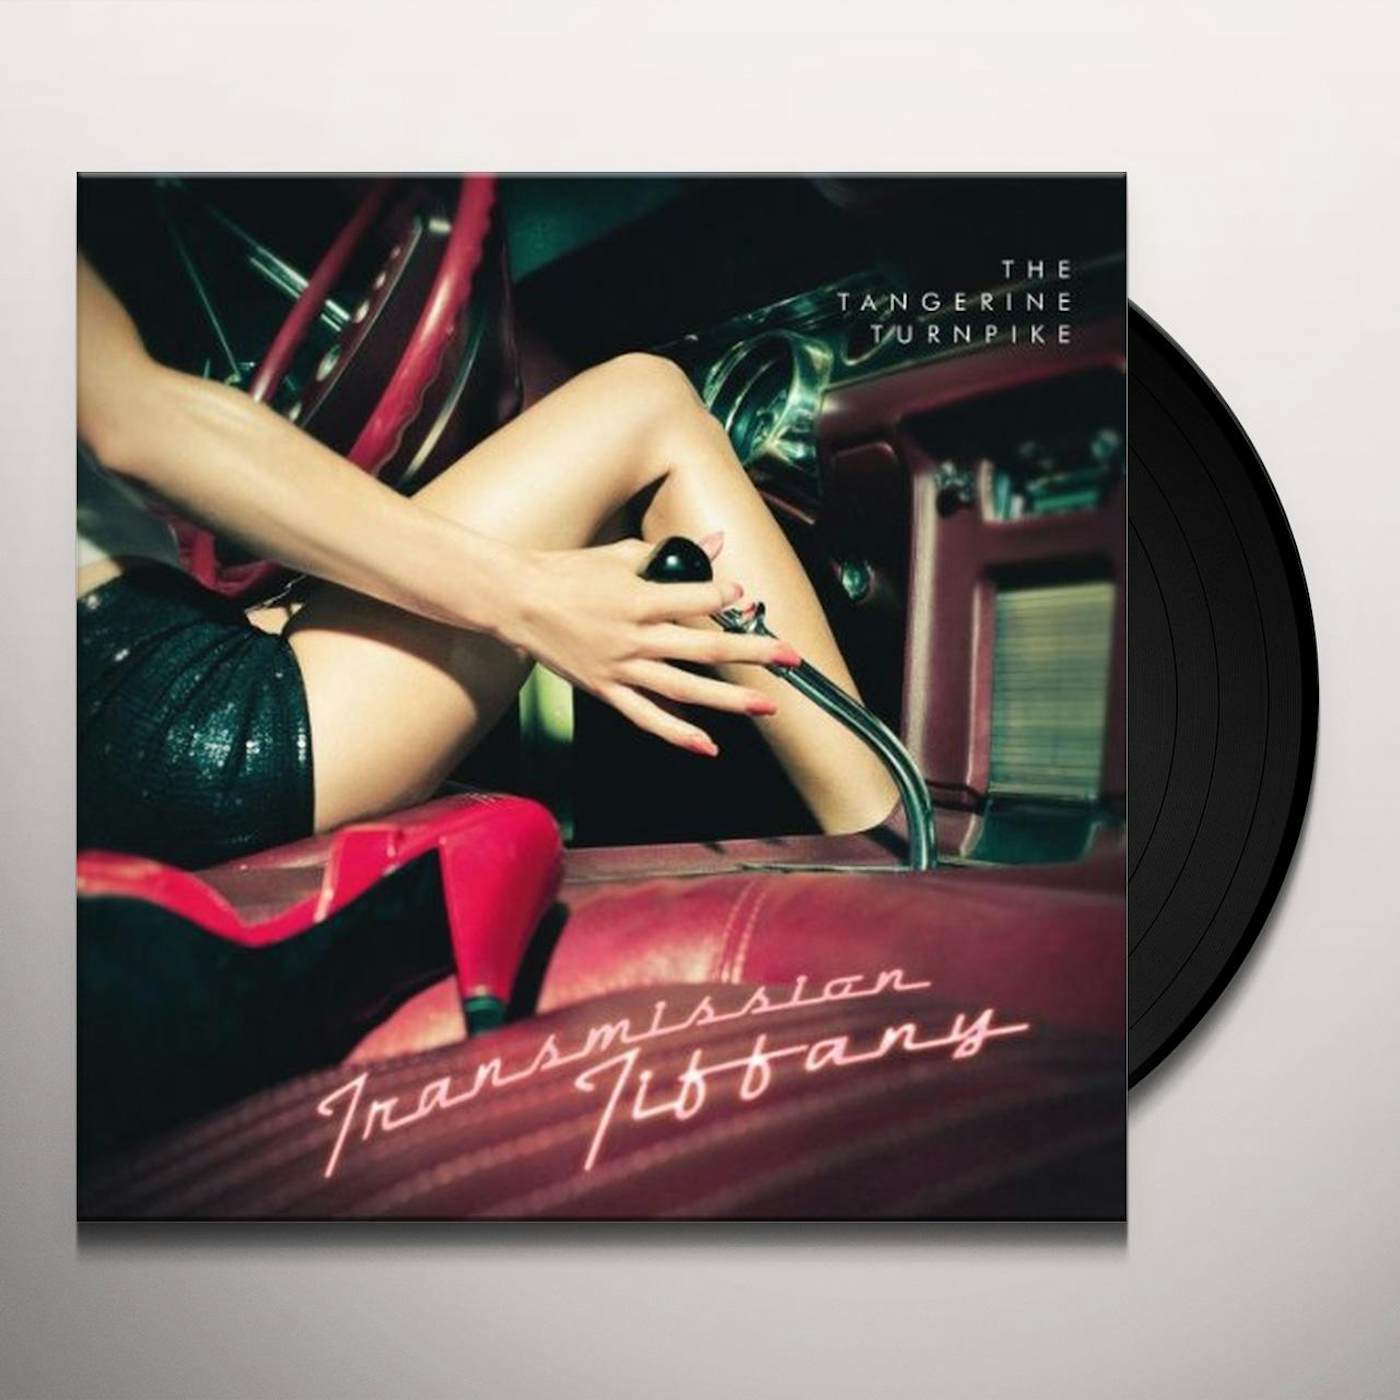 Tangerine Turnpike TRANSMISSION TIFFANY Vinyl Record